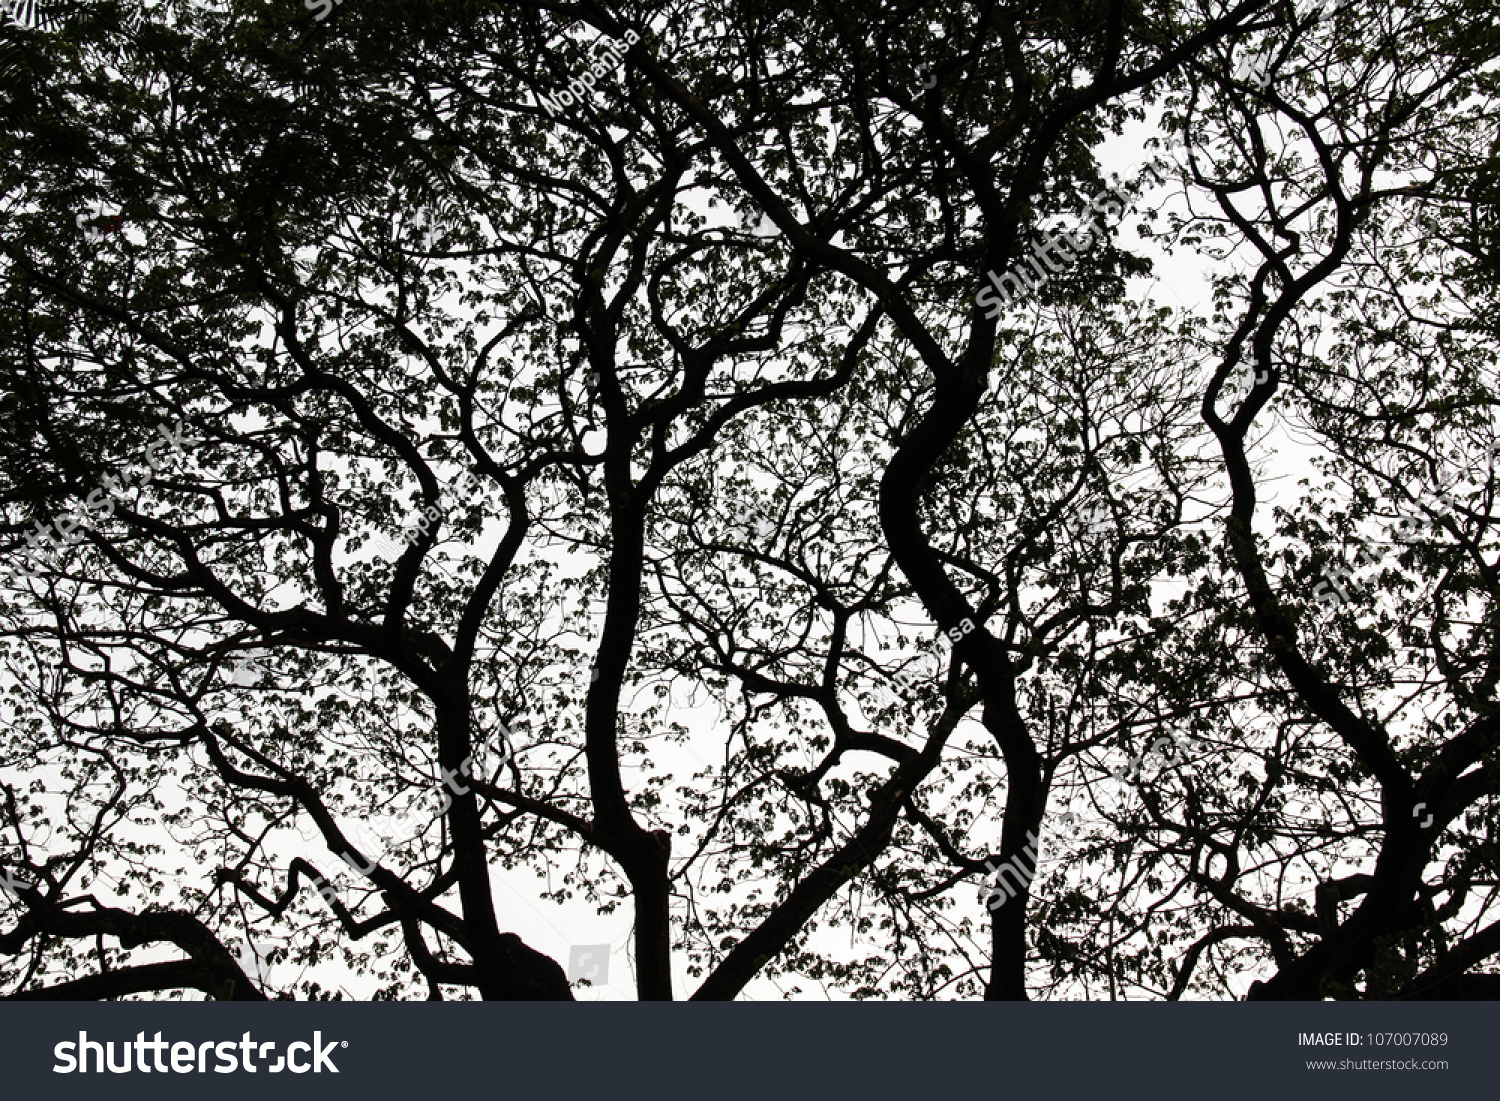 Branch Tree Black White Stock Photo 107007089 - Shutterstock